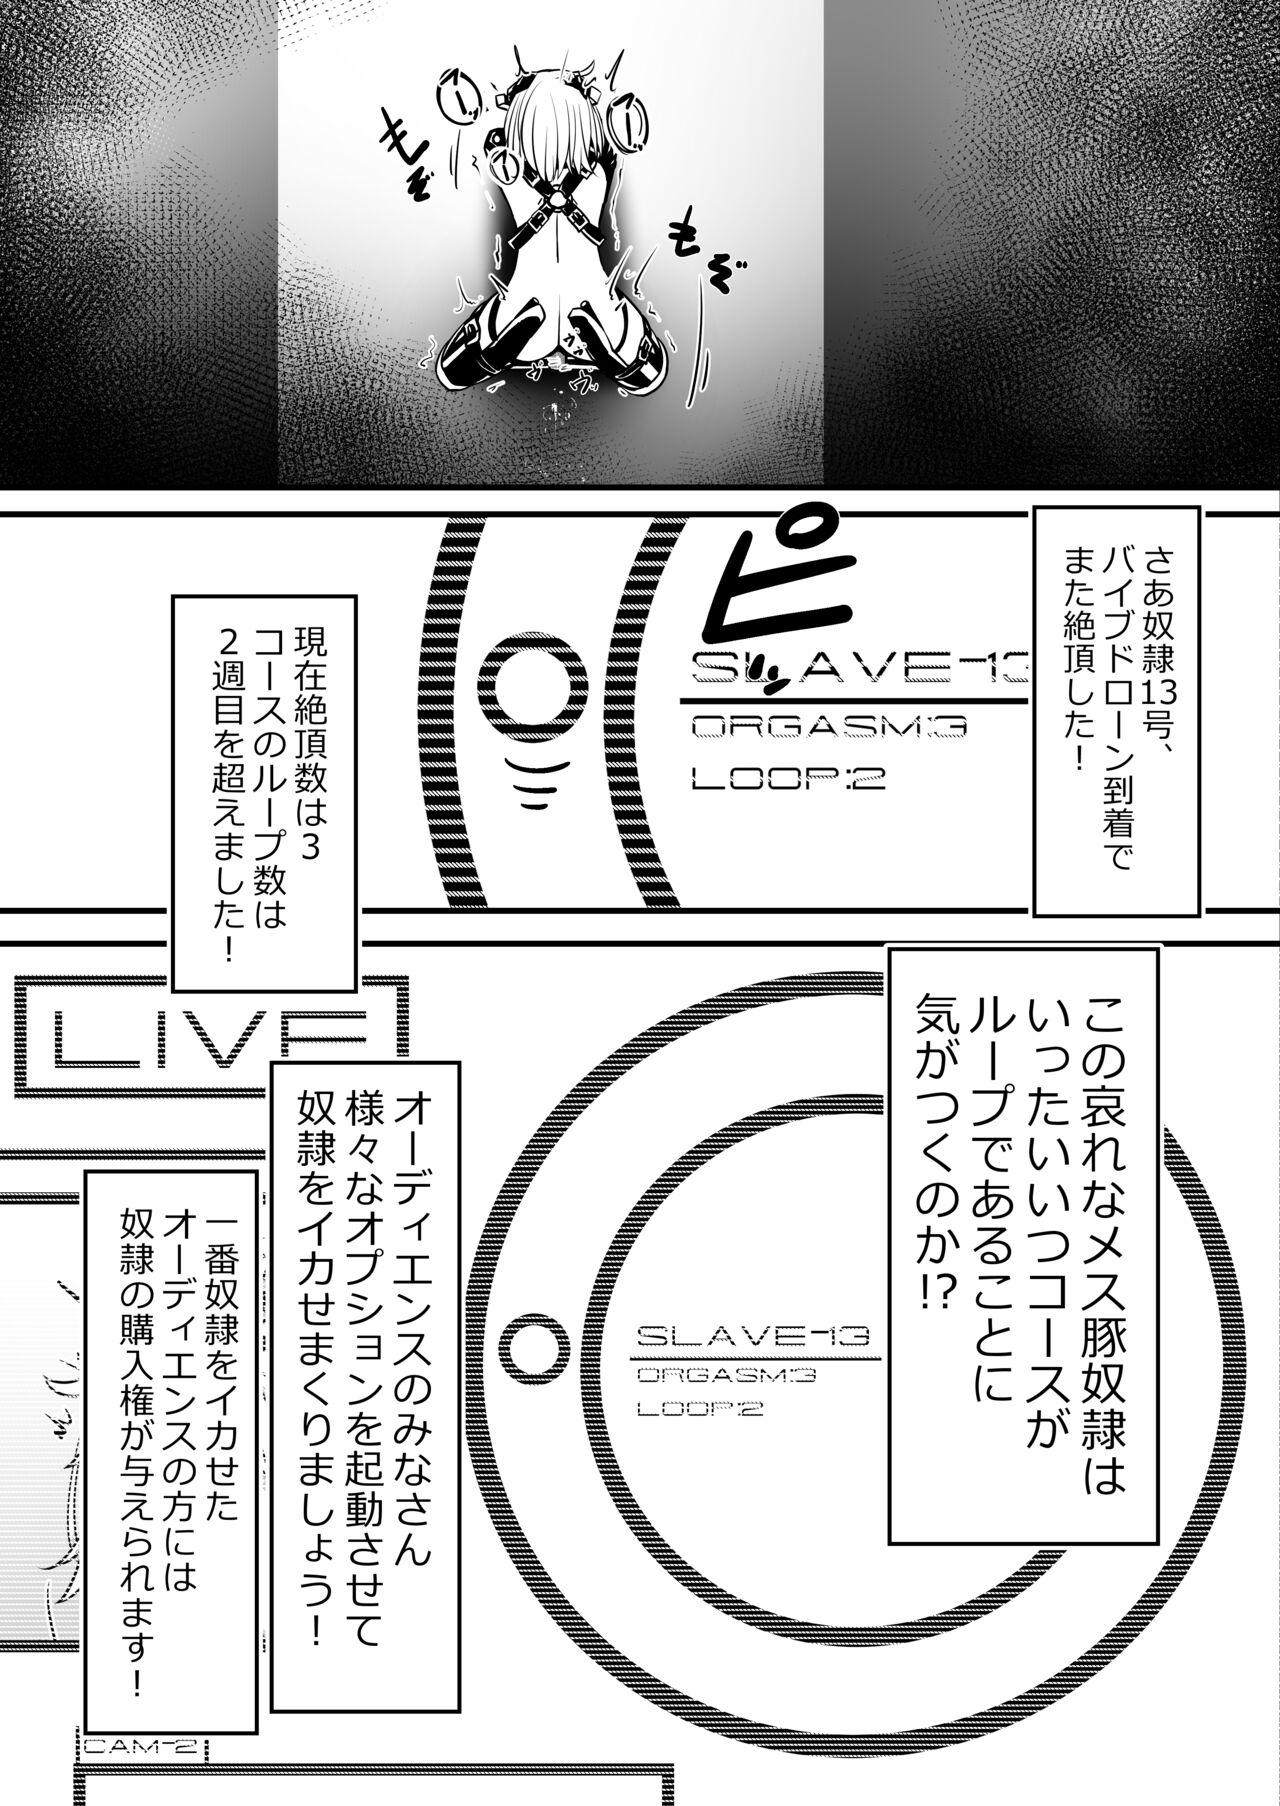 Pornstars ヒトイヌ馬之助ちゃん脱出漫画 - Original Web - Page 5